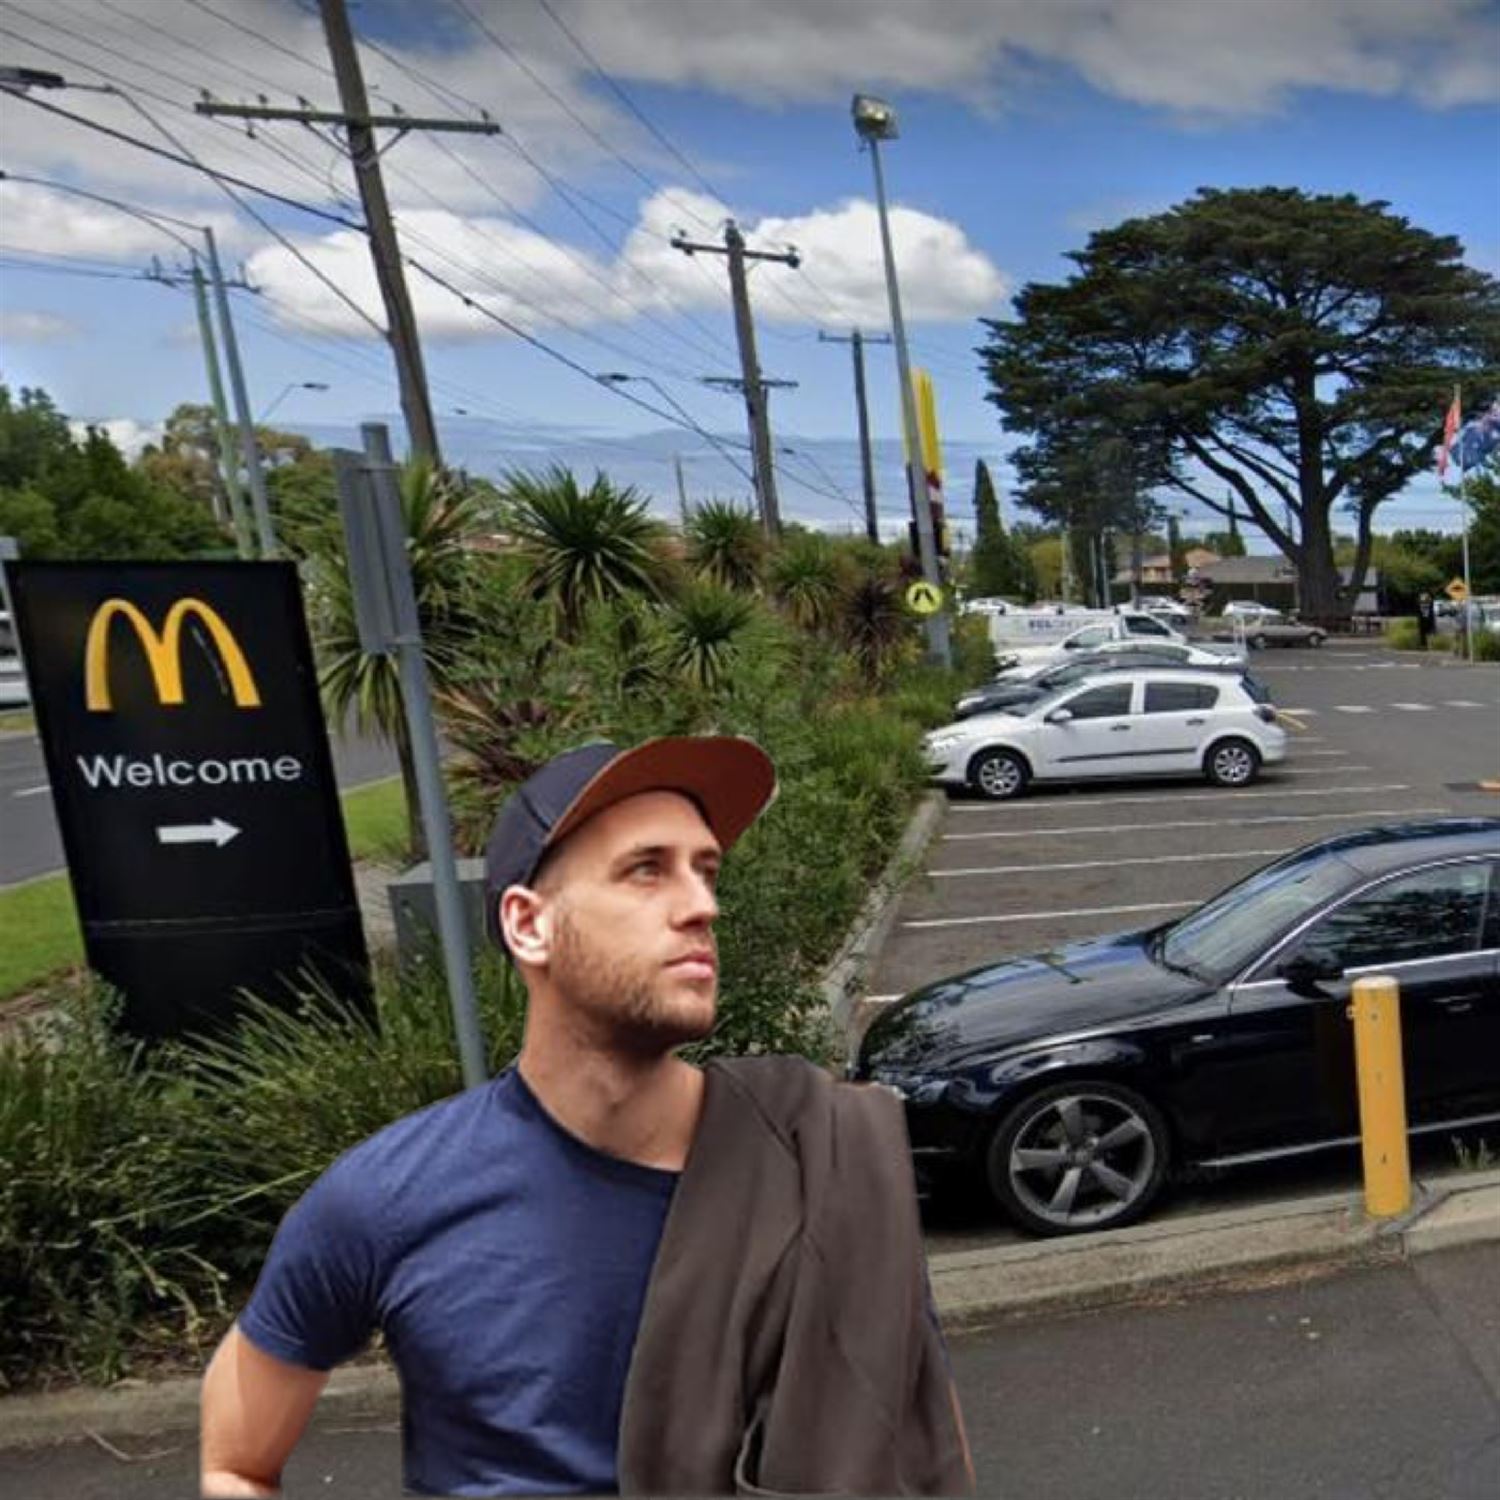 I almost got stood up in a McDonald's carpark